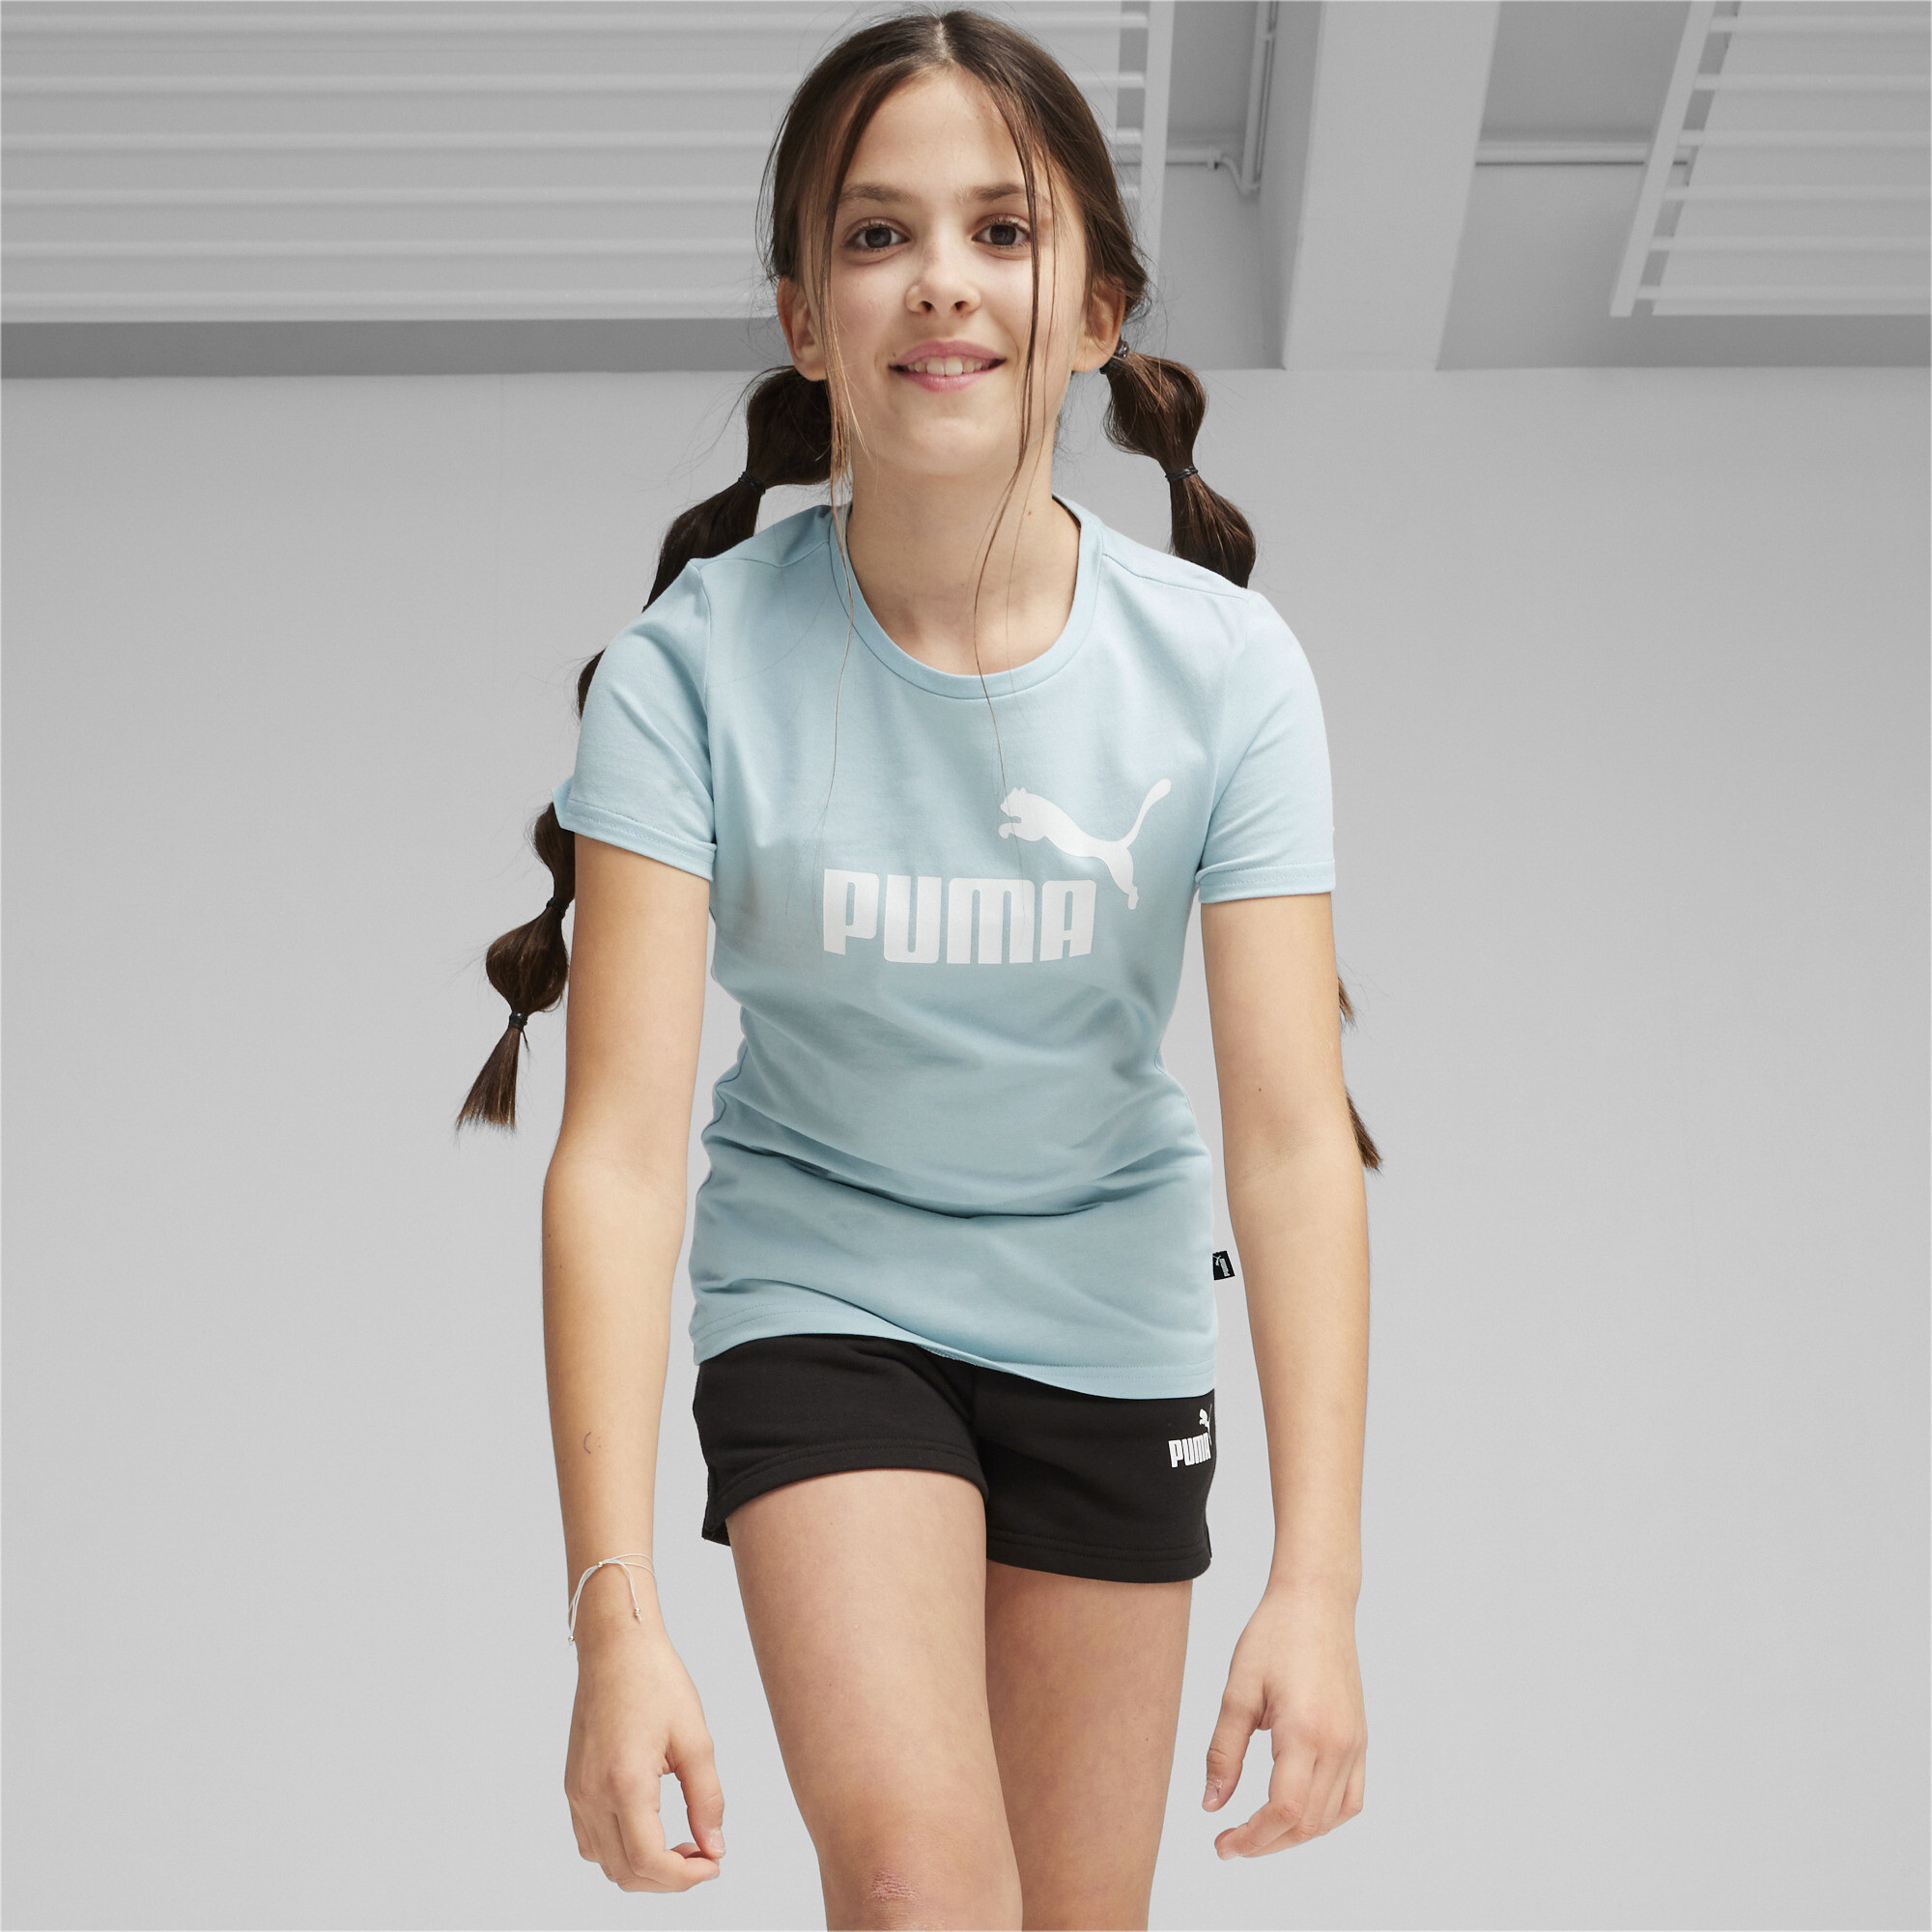 Women's Puma Logo Tee And Shorts Youth Set, Blue, Size 7-8Y, Clothing